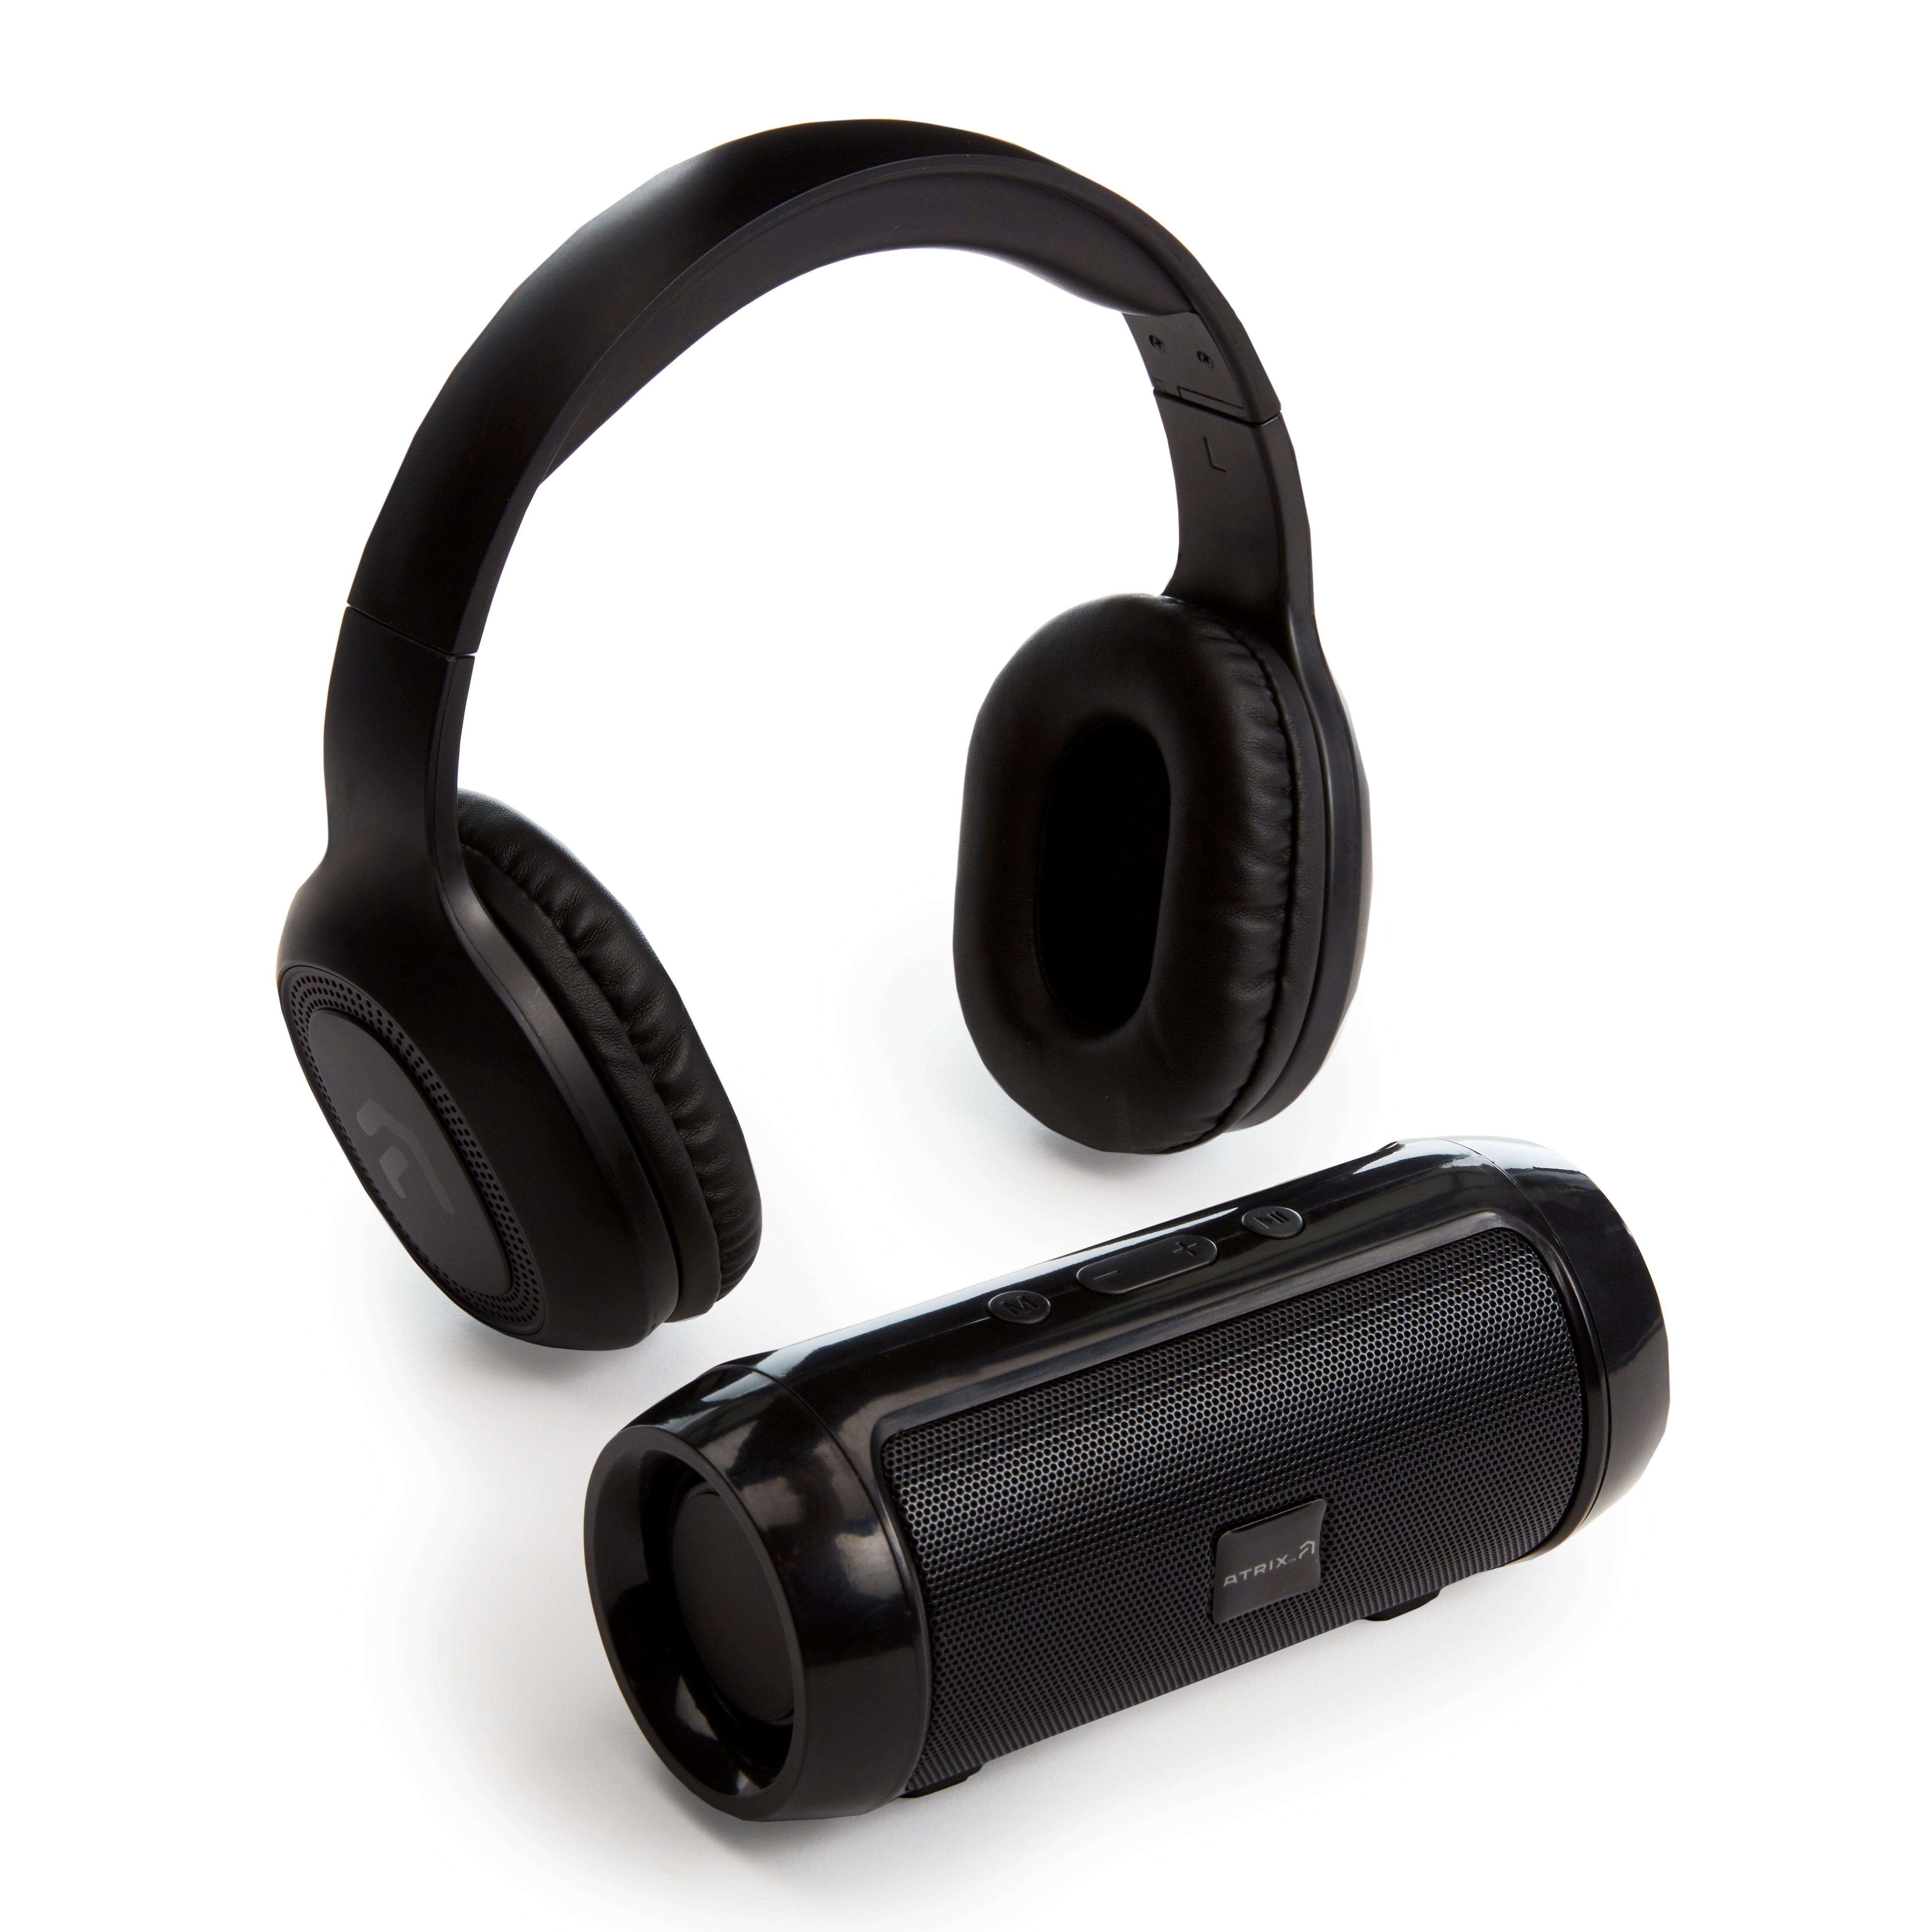 Uitgestorven Koning Lear credit Atrix Wireless Headset and Speaker GameStop Exclusive | GameStop